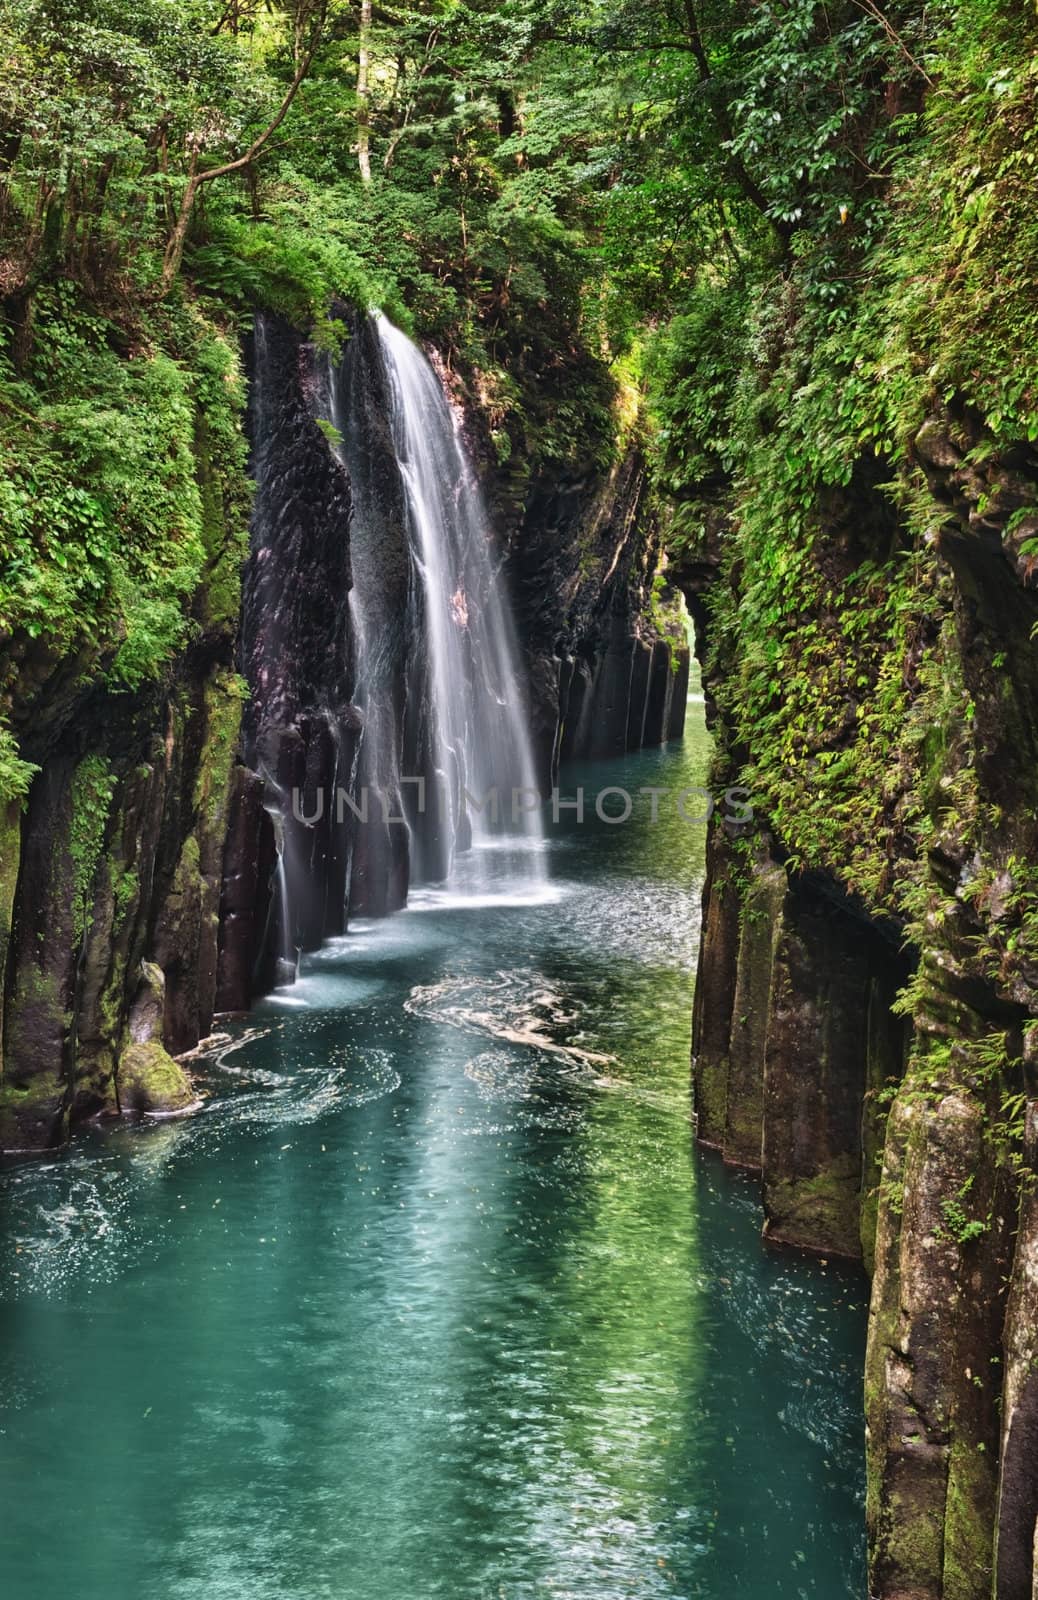 Beautiful gorge Takachiho with a blue river and waterfall, Japan - Kyushu island